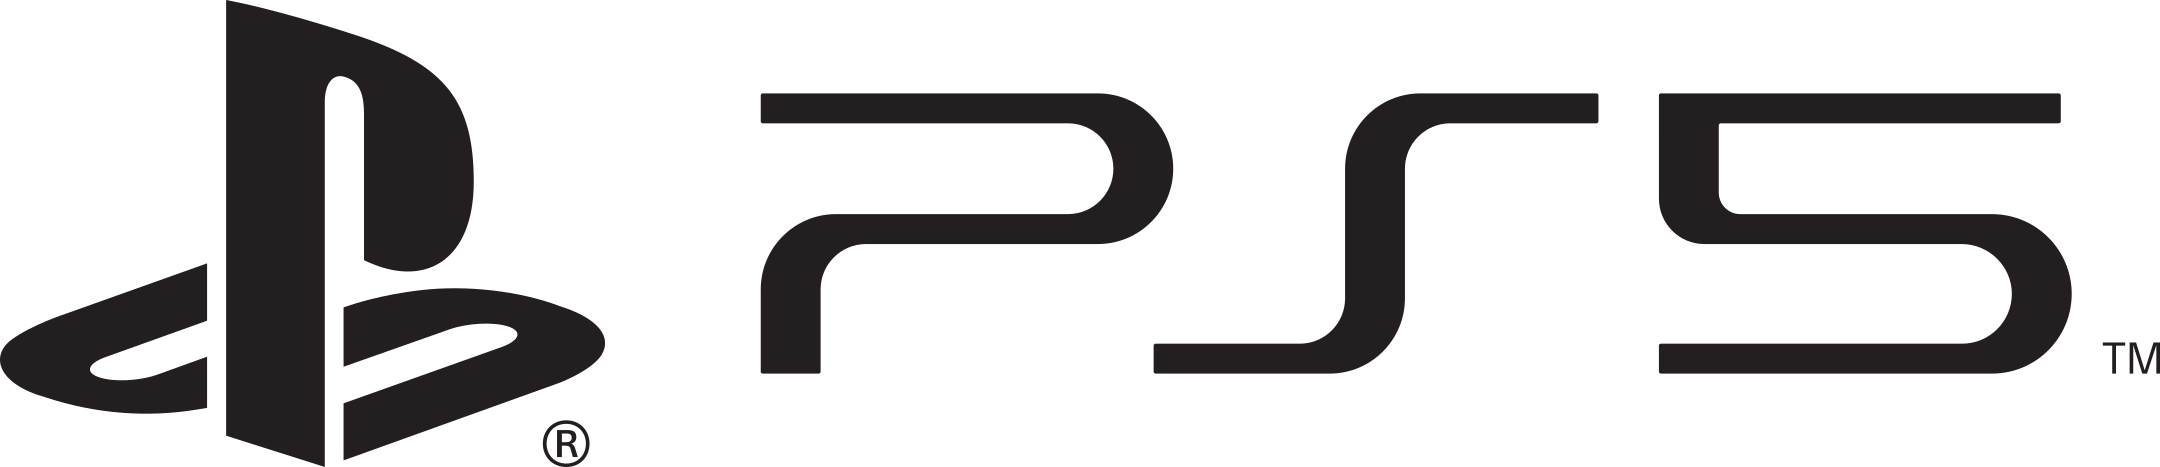 PS5 Logo - PlayStation 5 Logo.